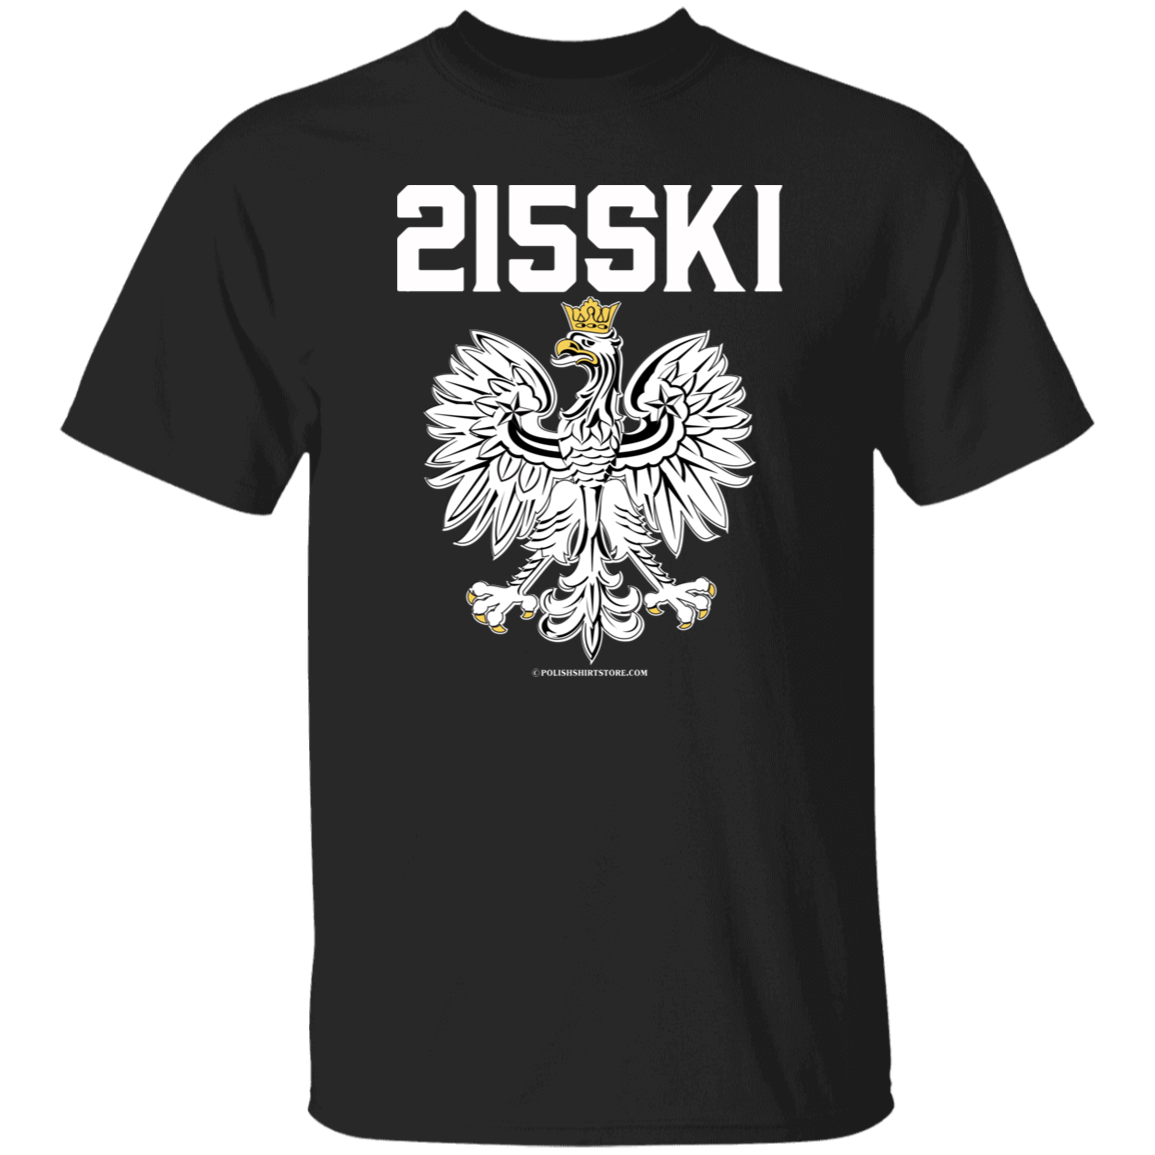 215SKI Area Code 215 Apparel CustomCat G500 5.3 oz. T-Shirt Black S